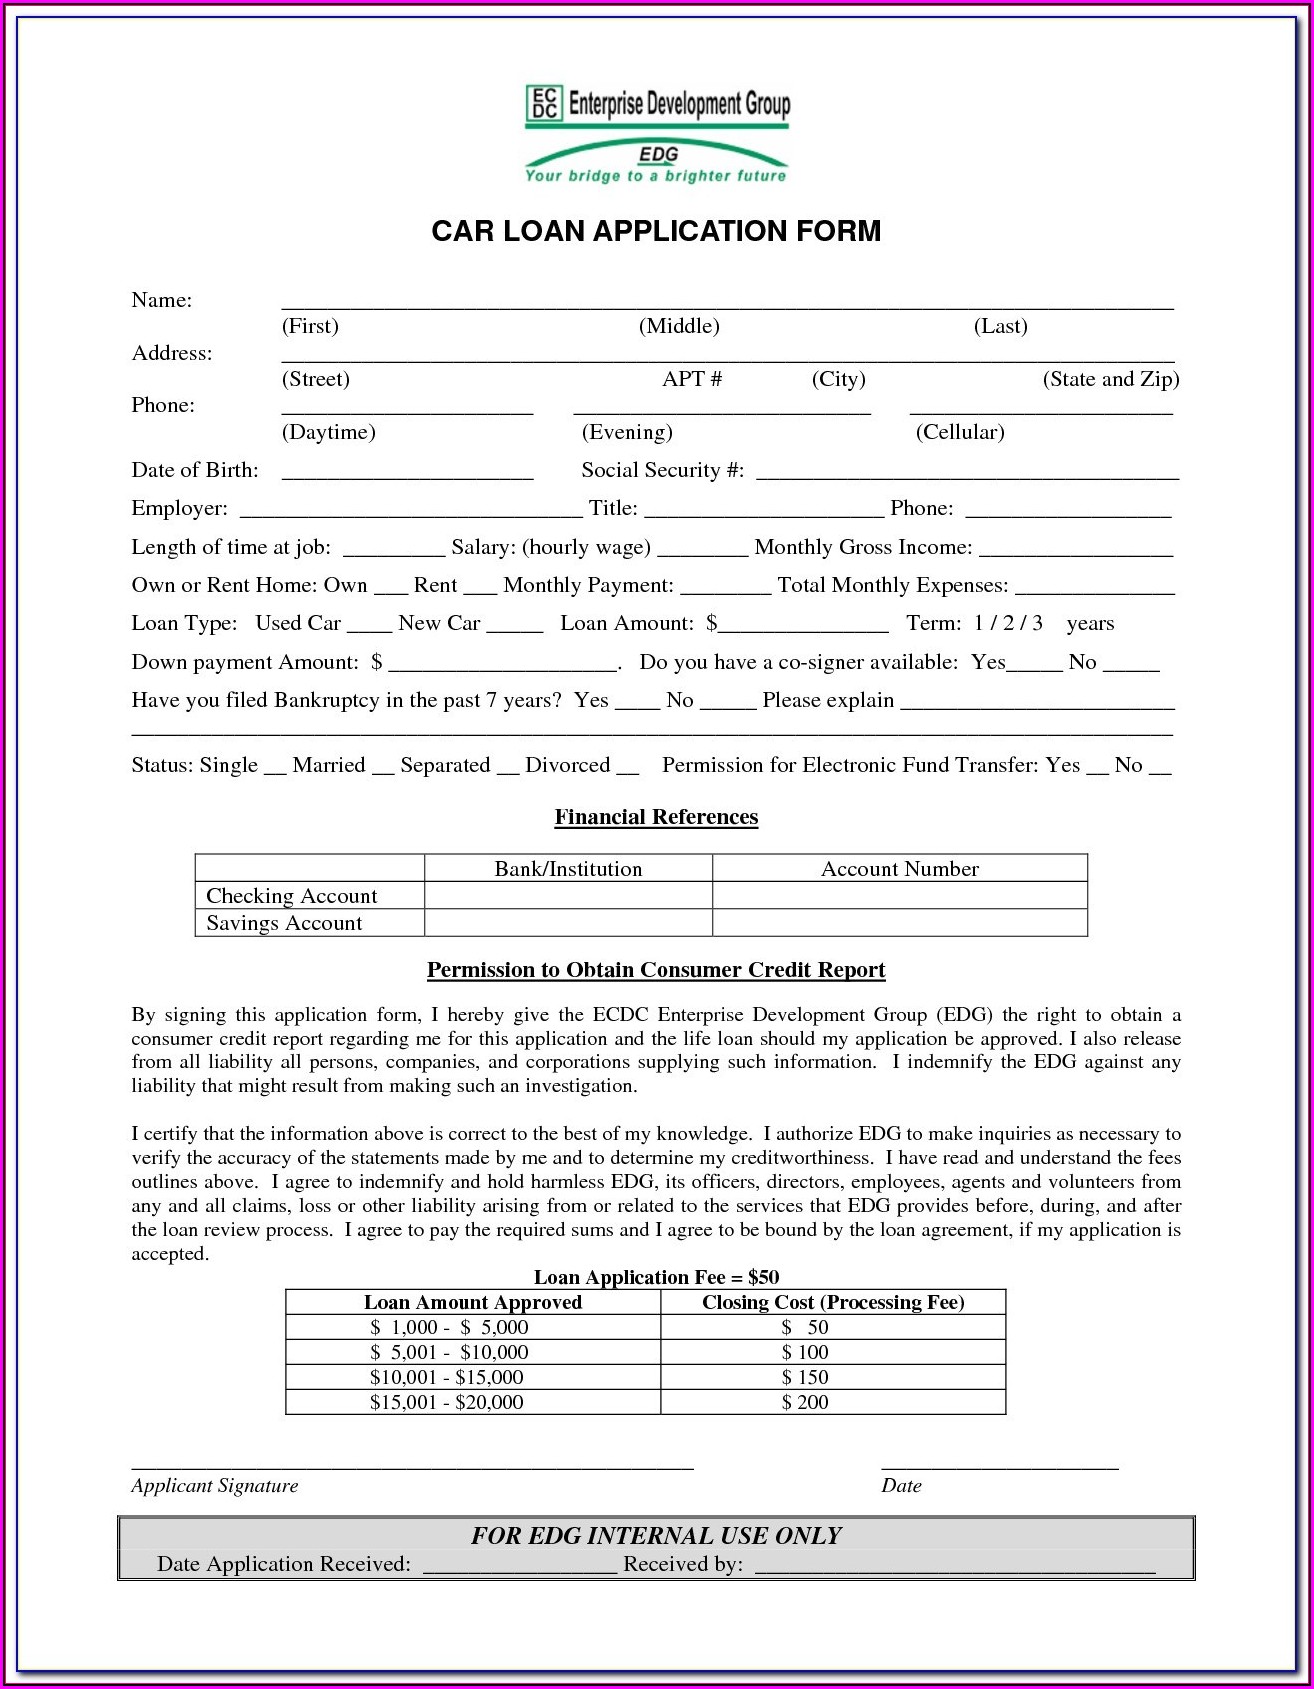 Loaner Car Agreement Form